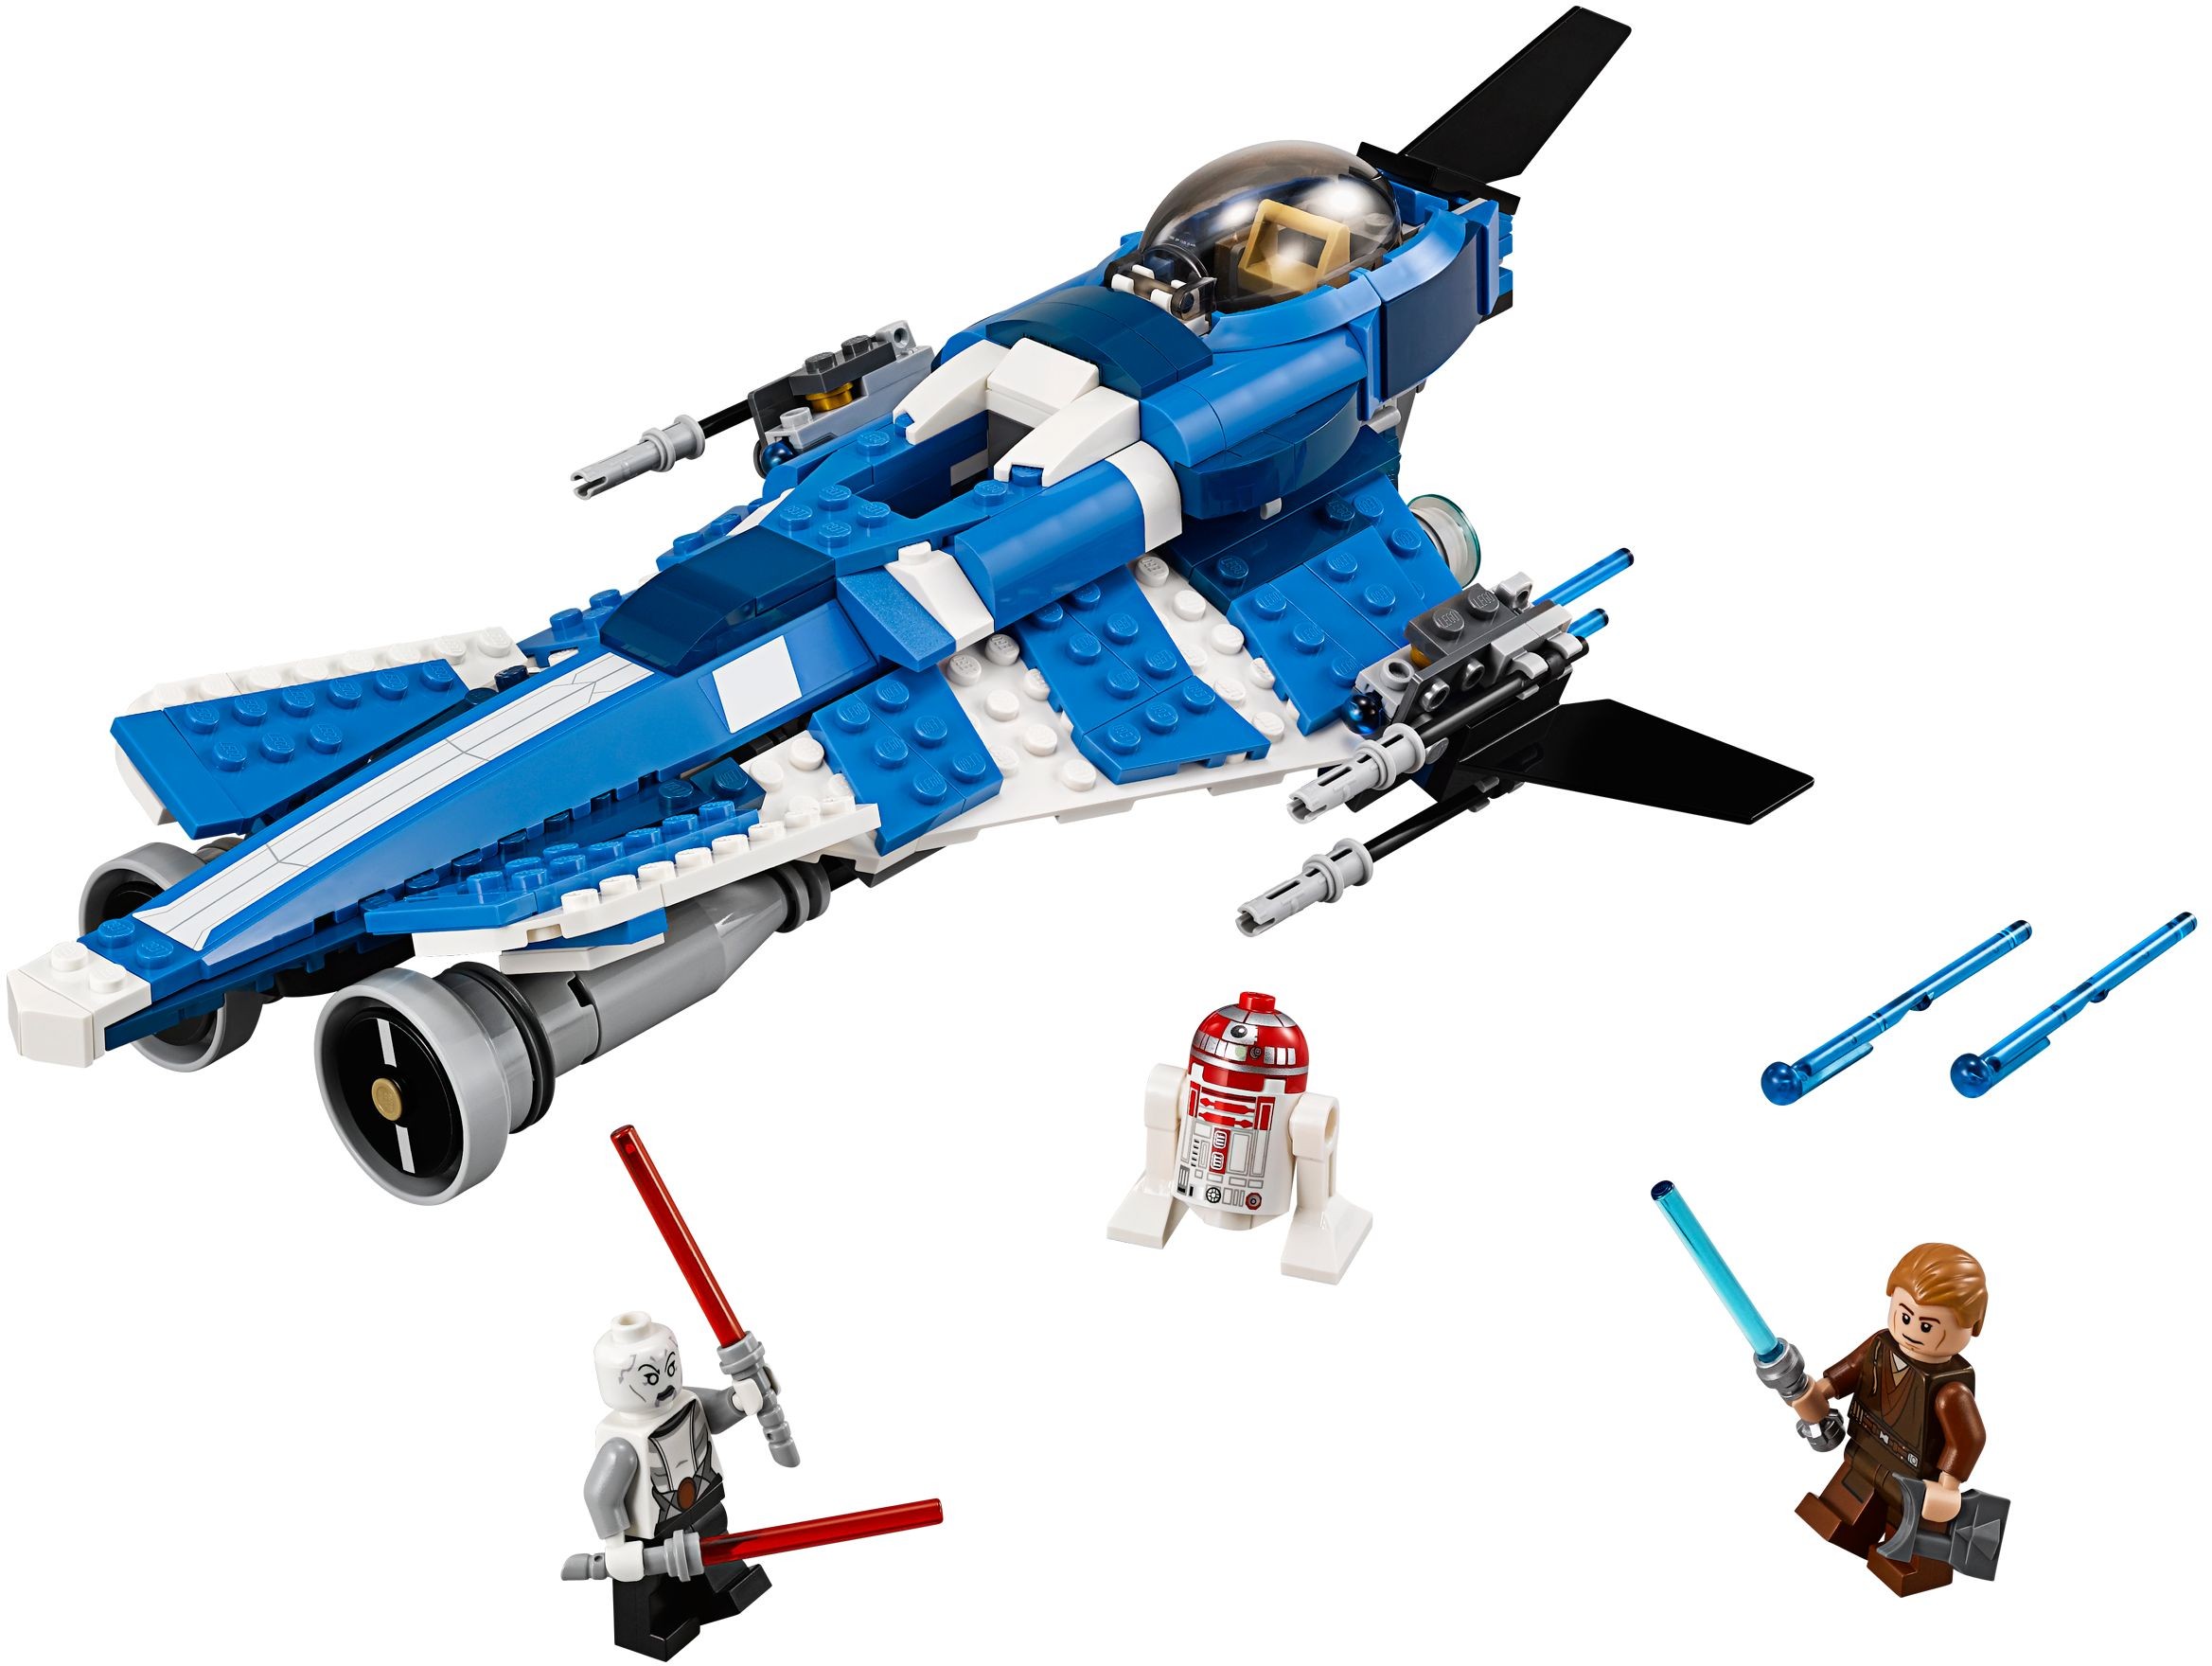 Star Wars 2015 Brickset Lego Set Guide And Database